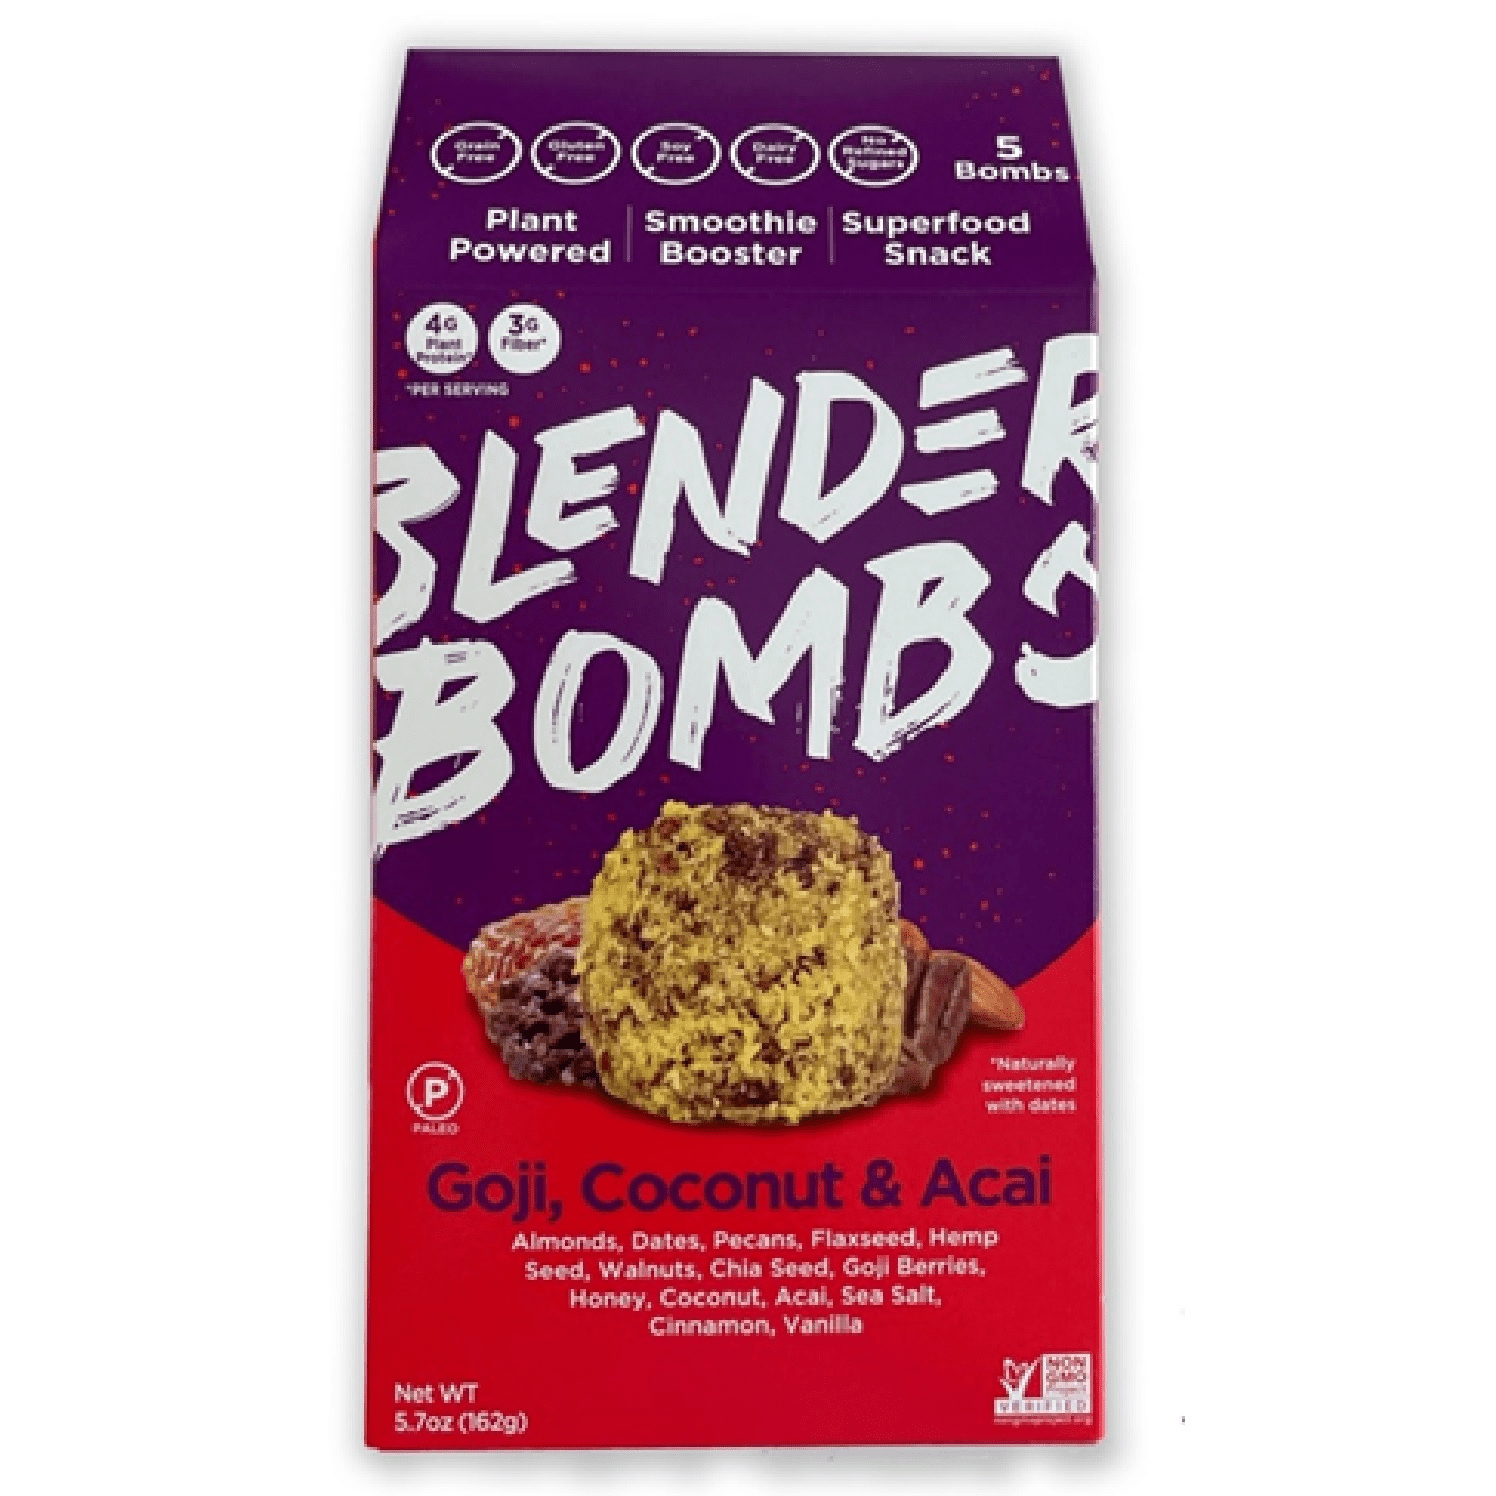 Granola So Bomb: Super Seed; (Blender Bombs)